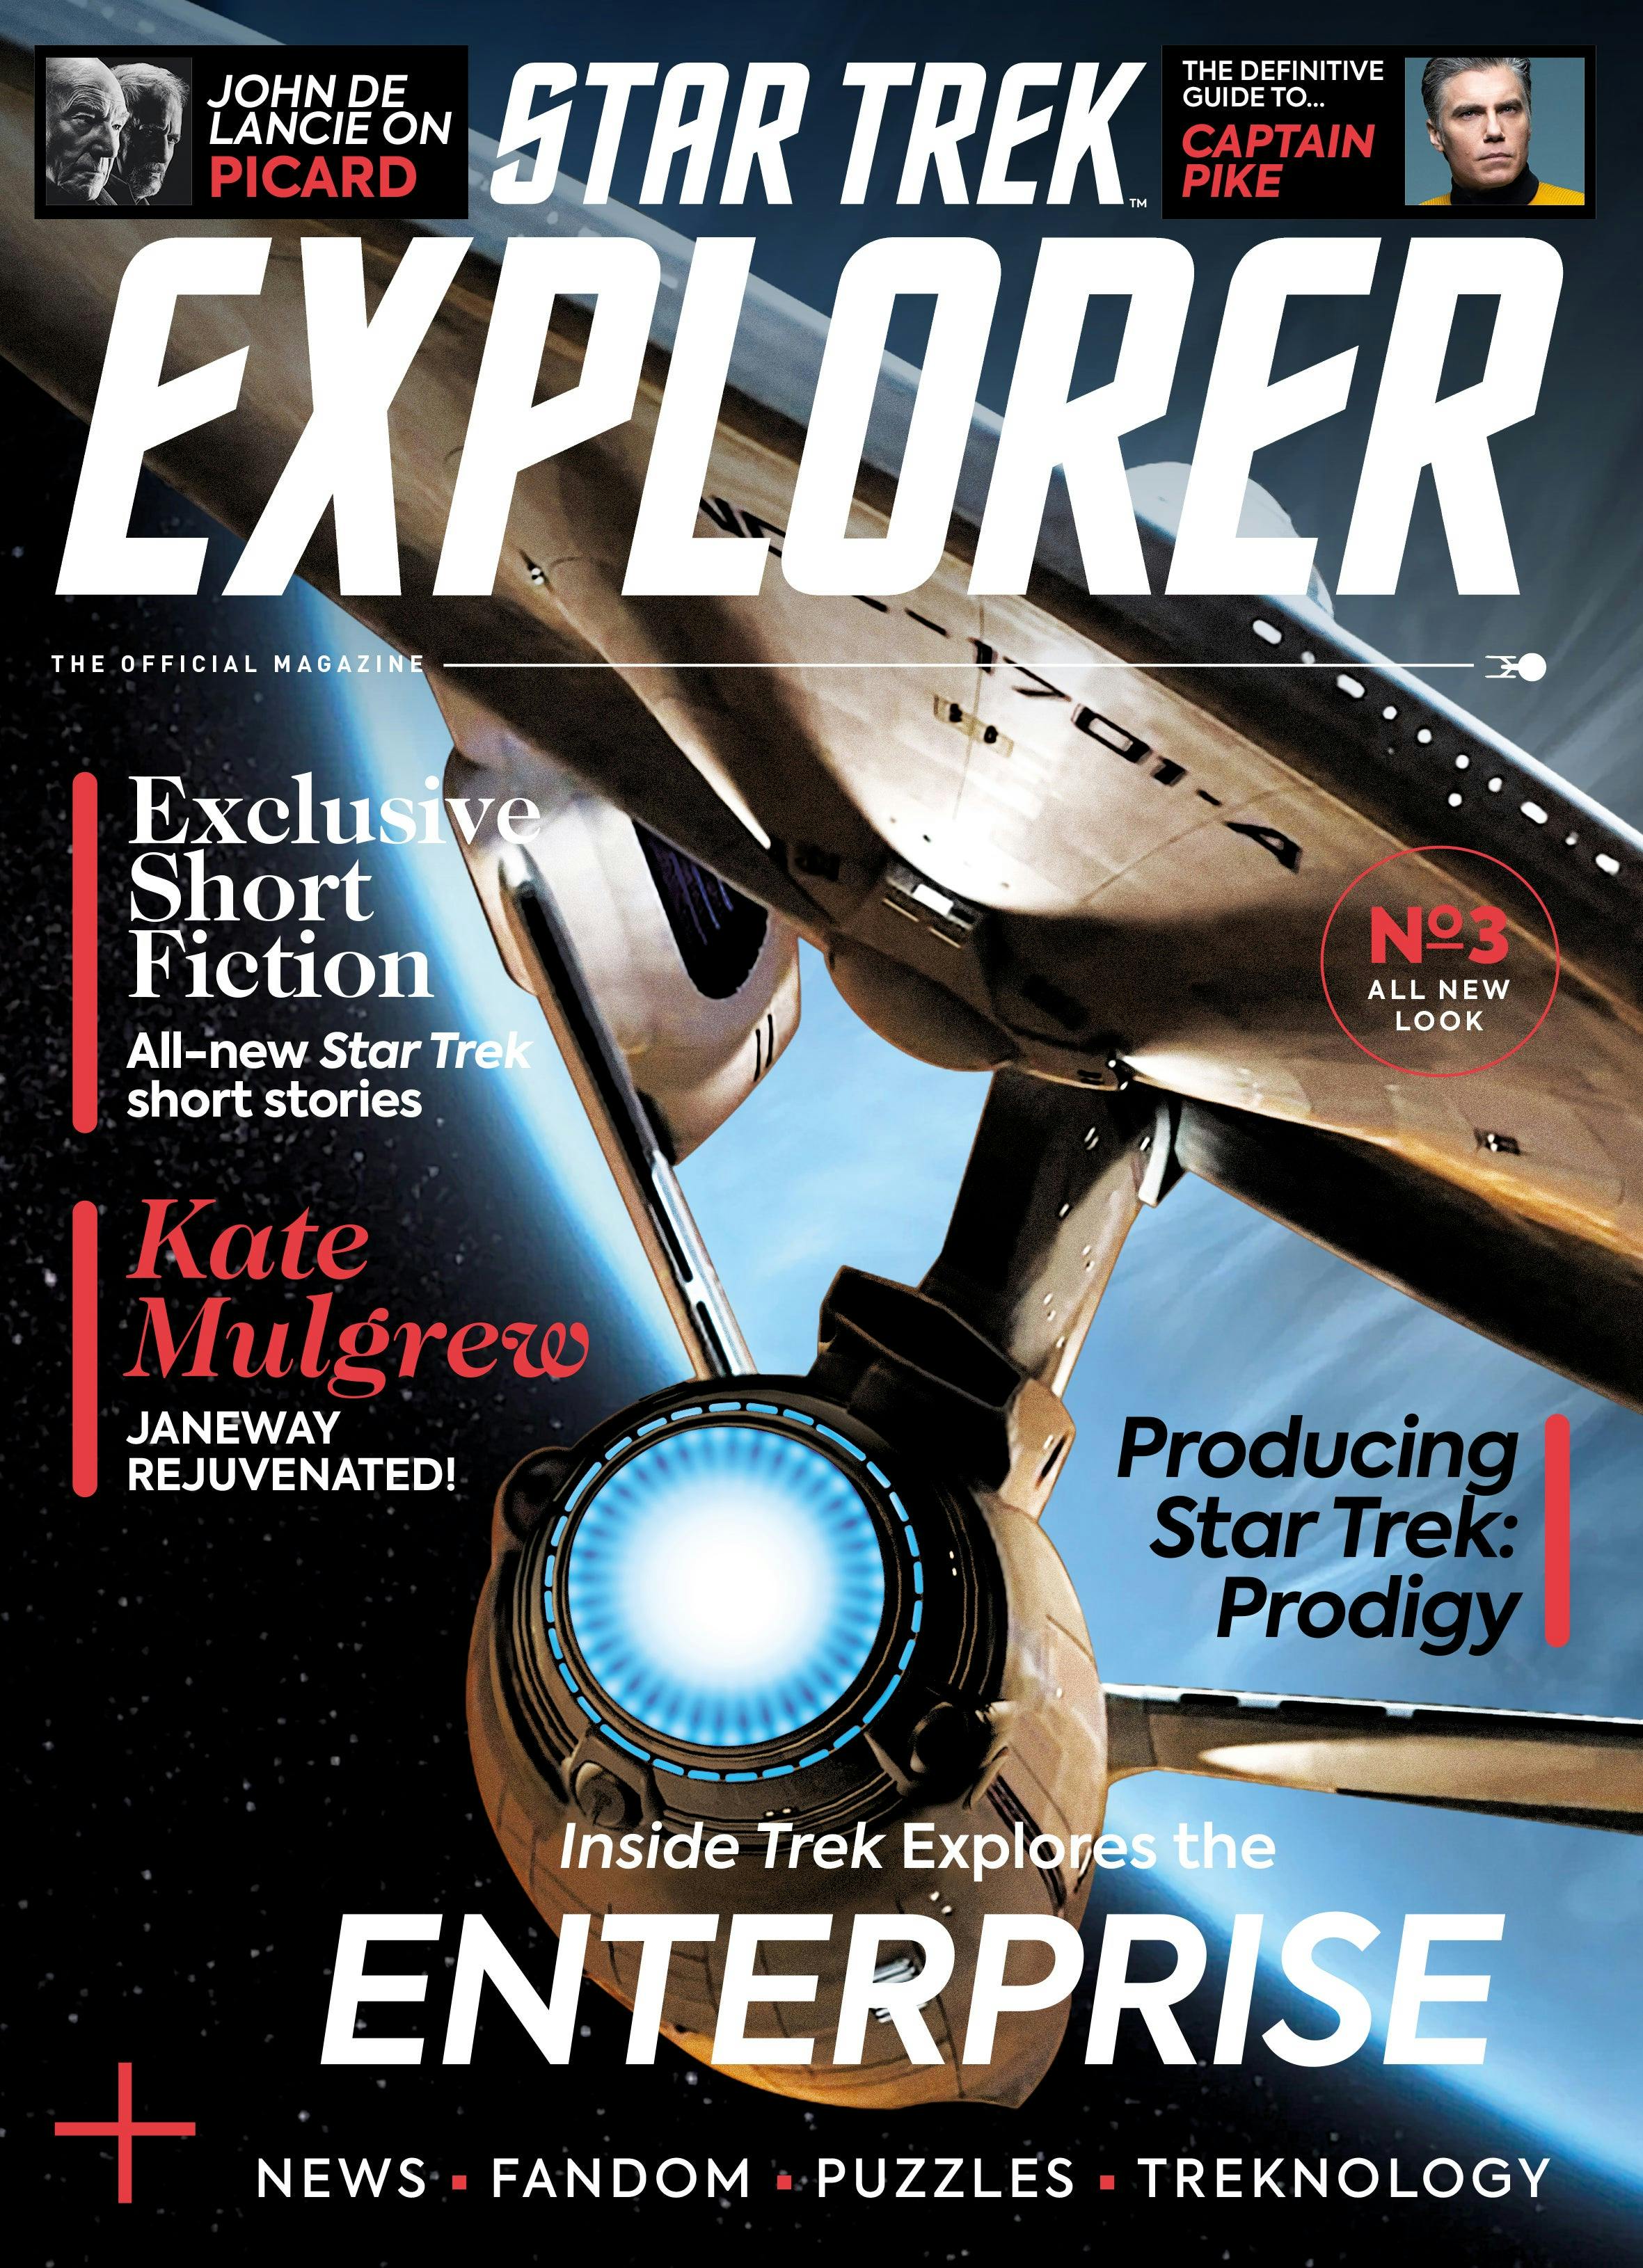 The cover of Star Trek Explorer #3, featuring the U.S.S. Enterprise.